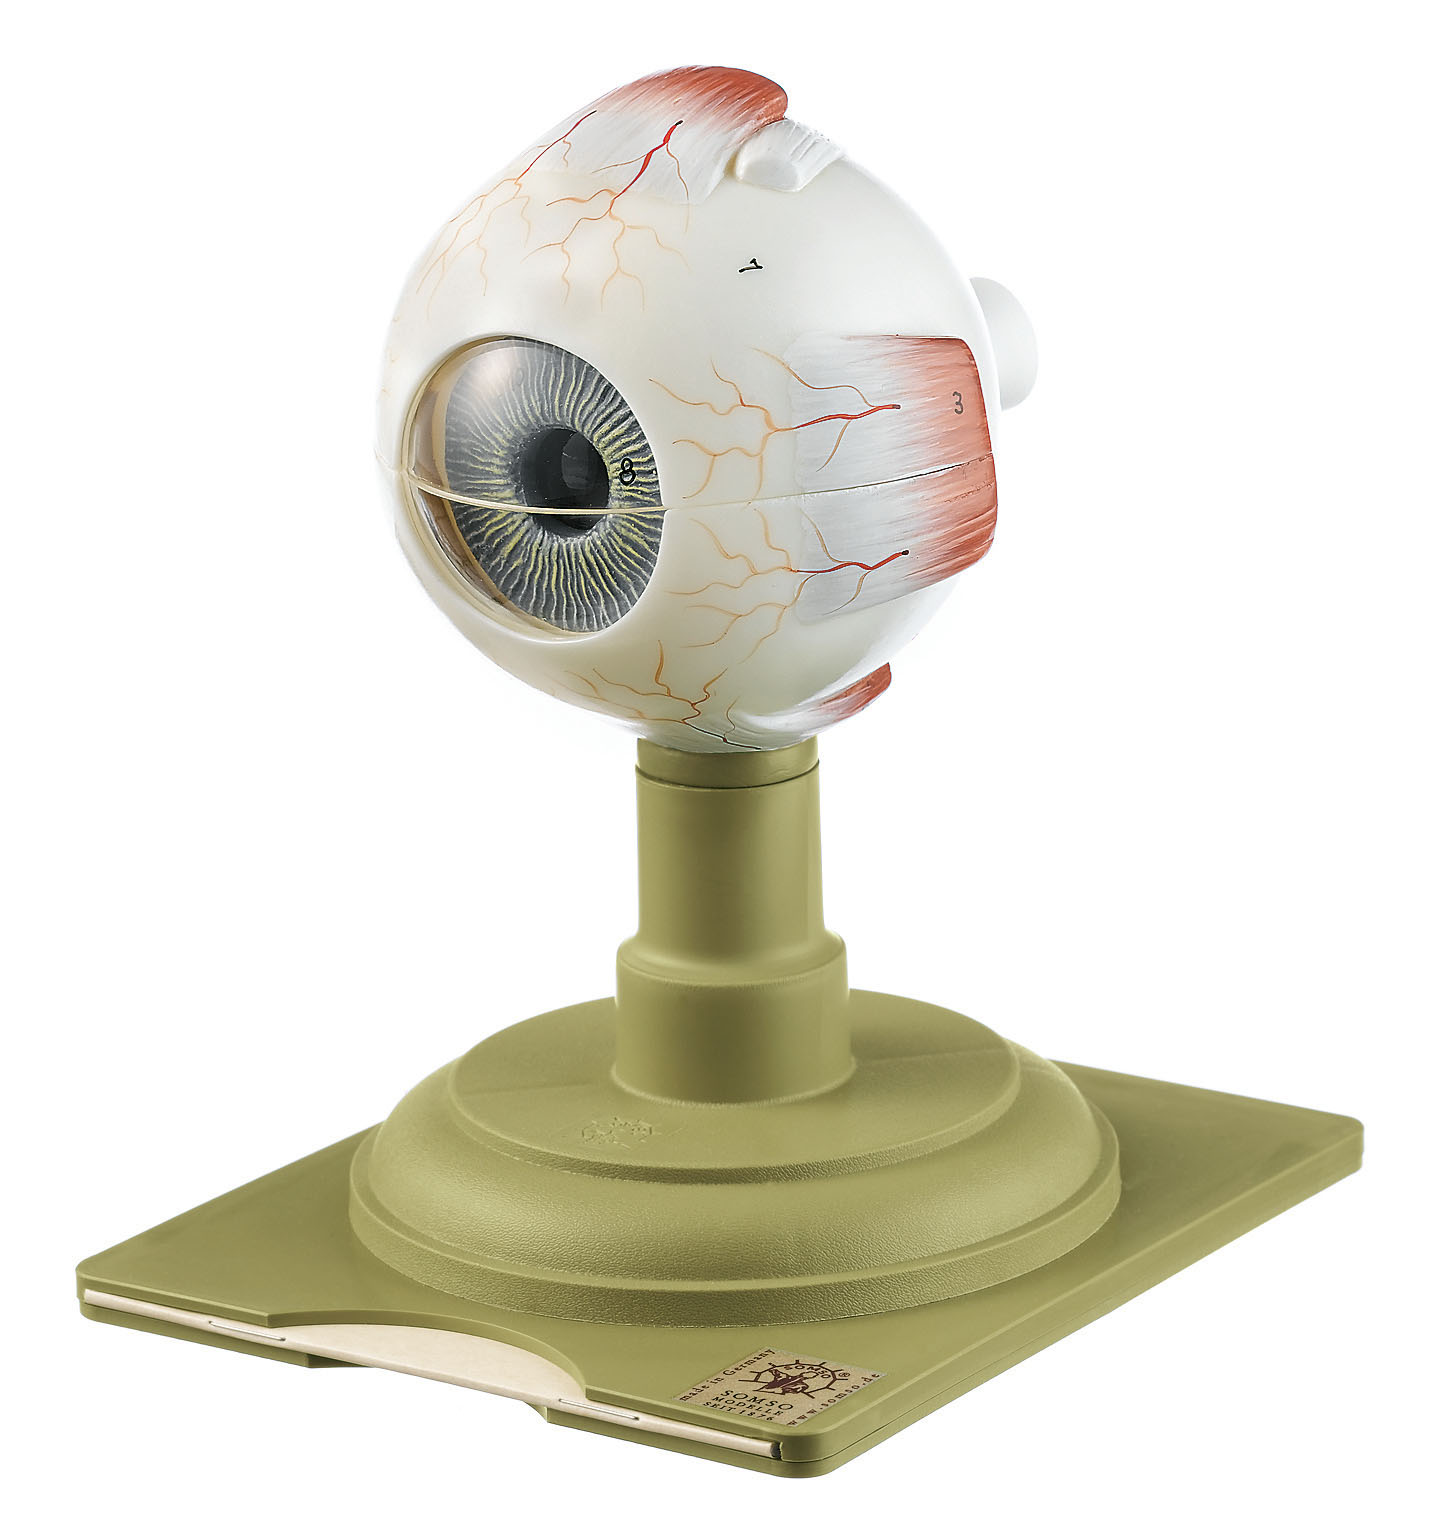 Eyeball – Separates Into 6 Parts